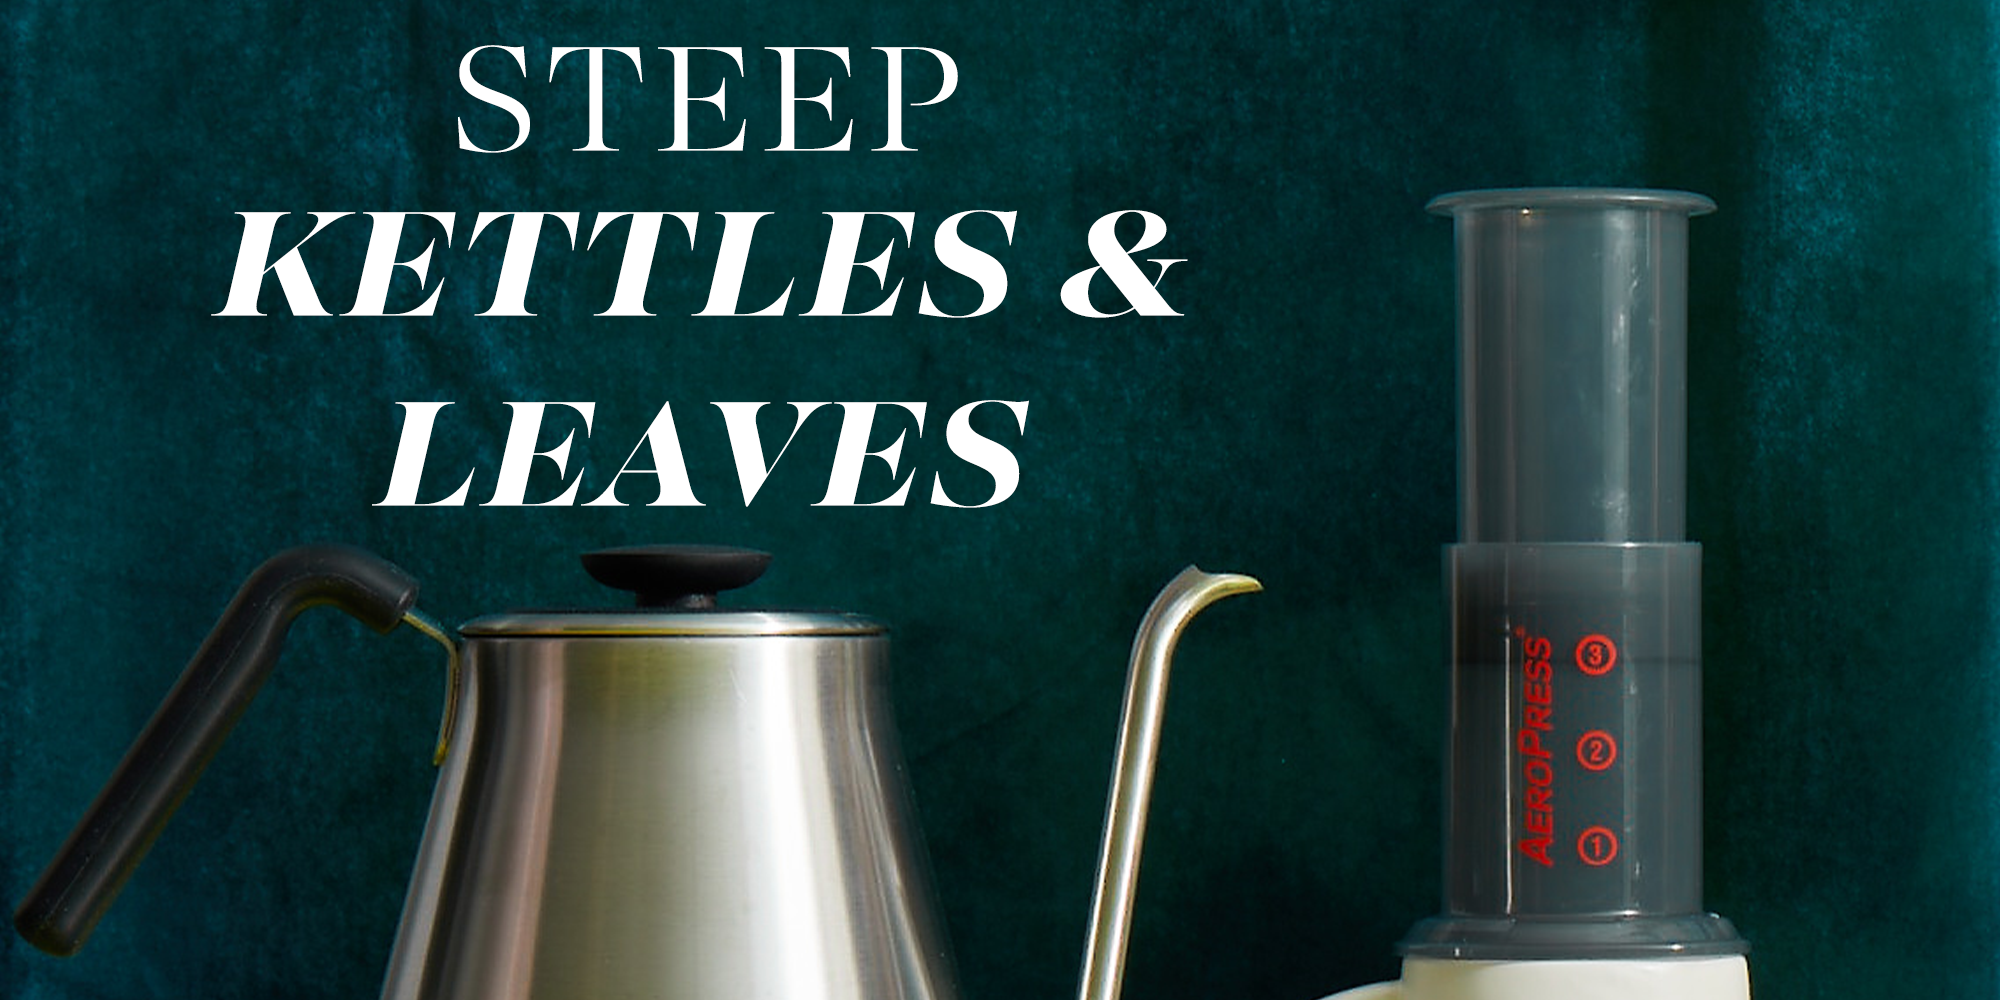 steep kettles and leaves